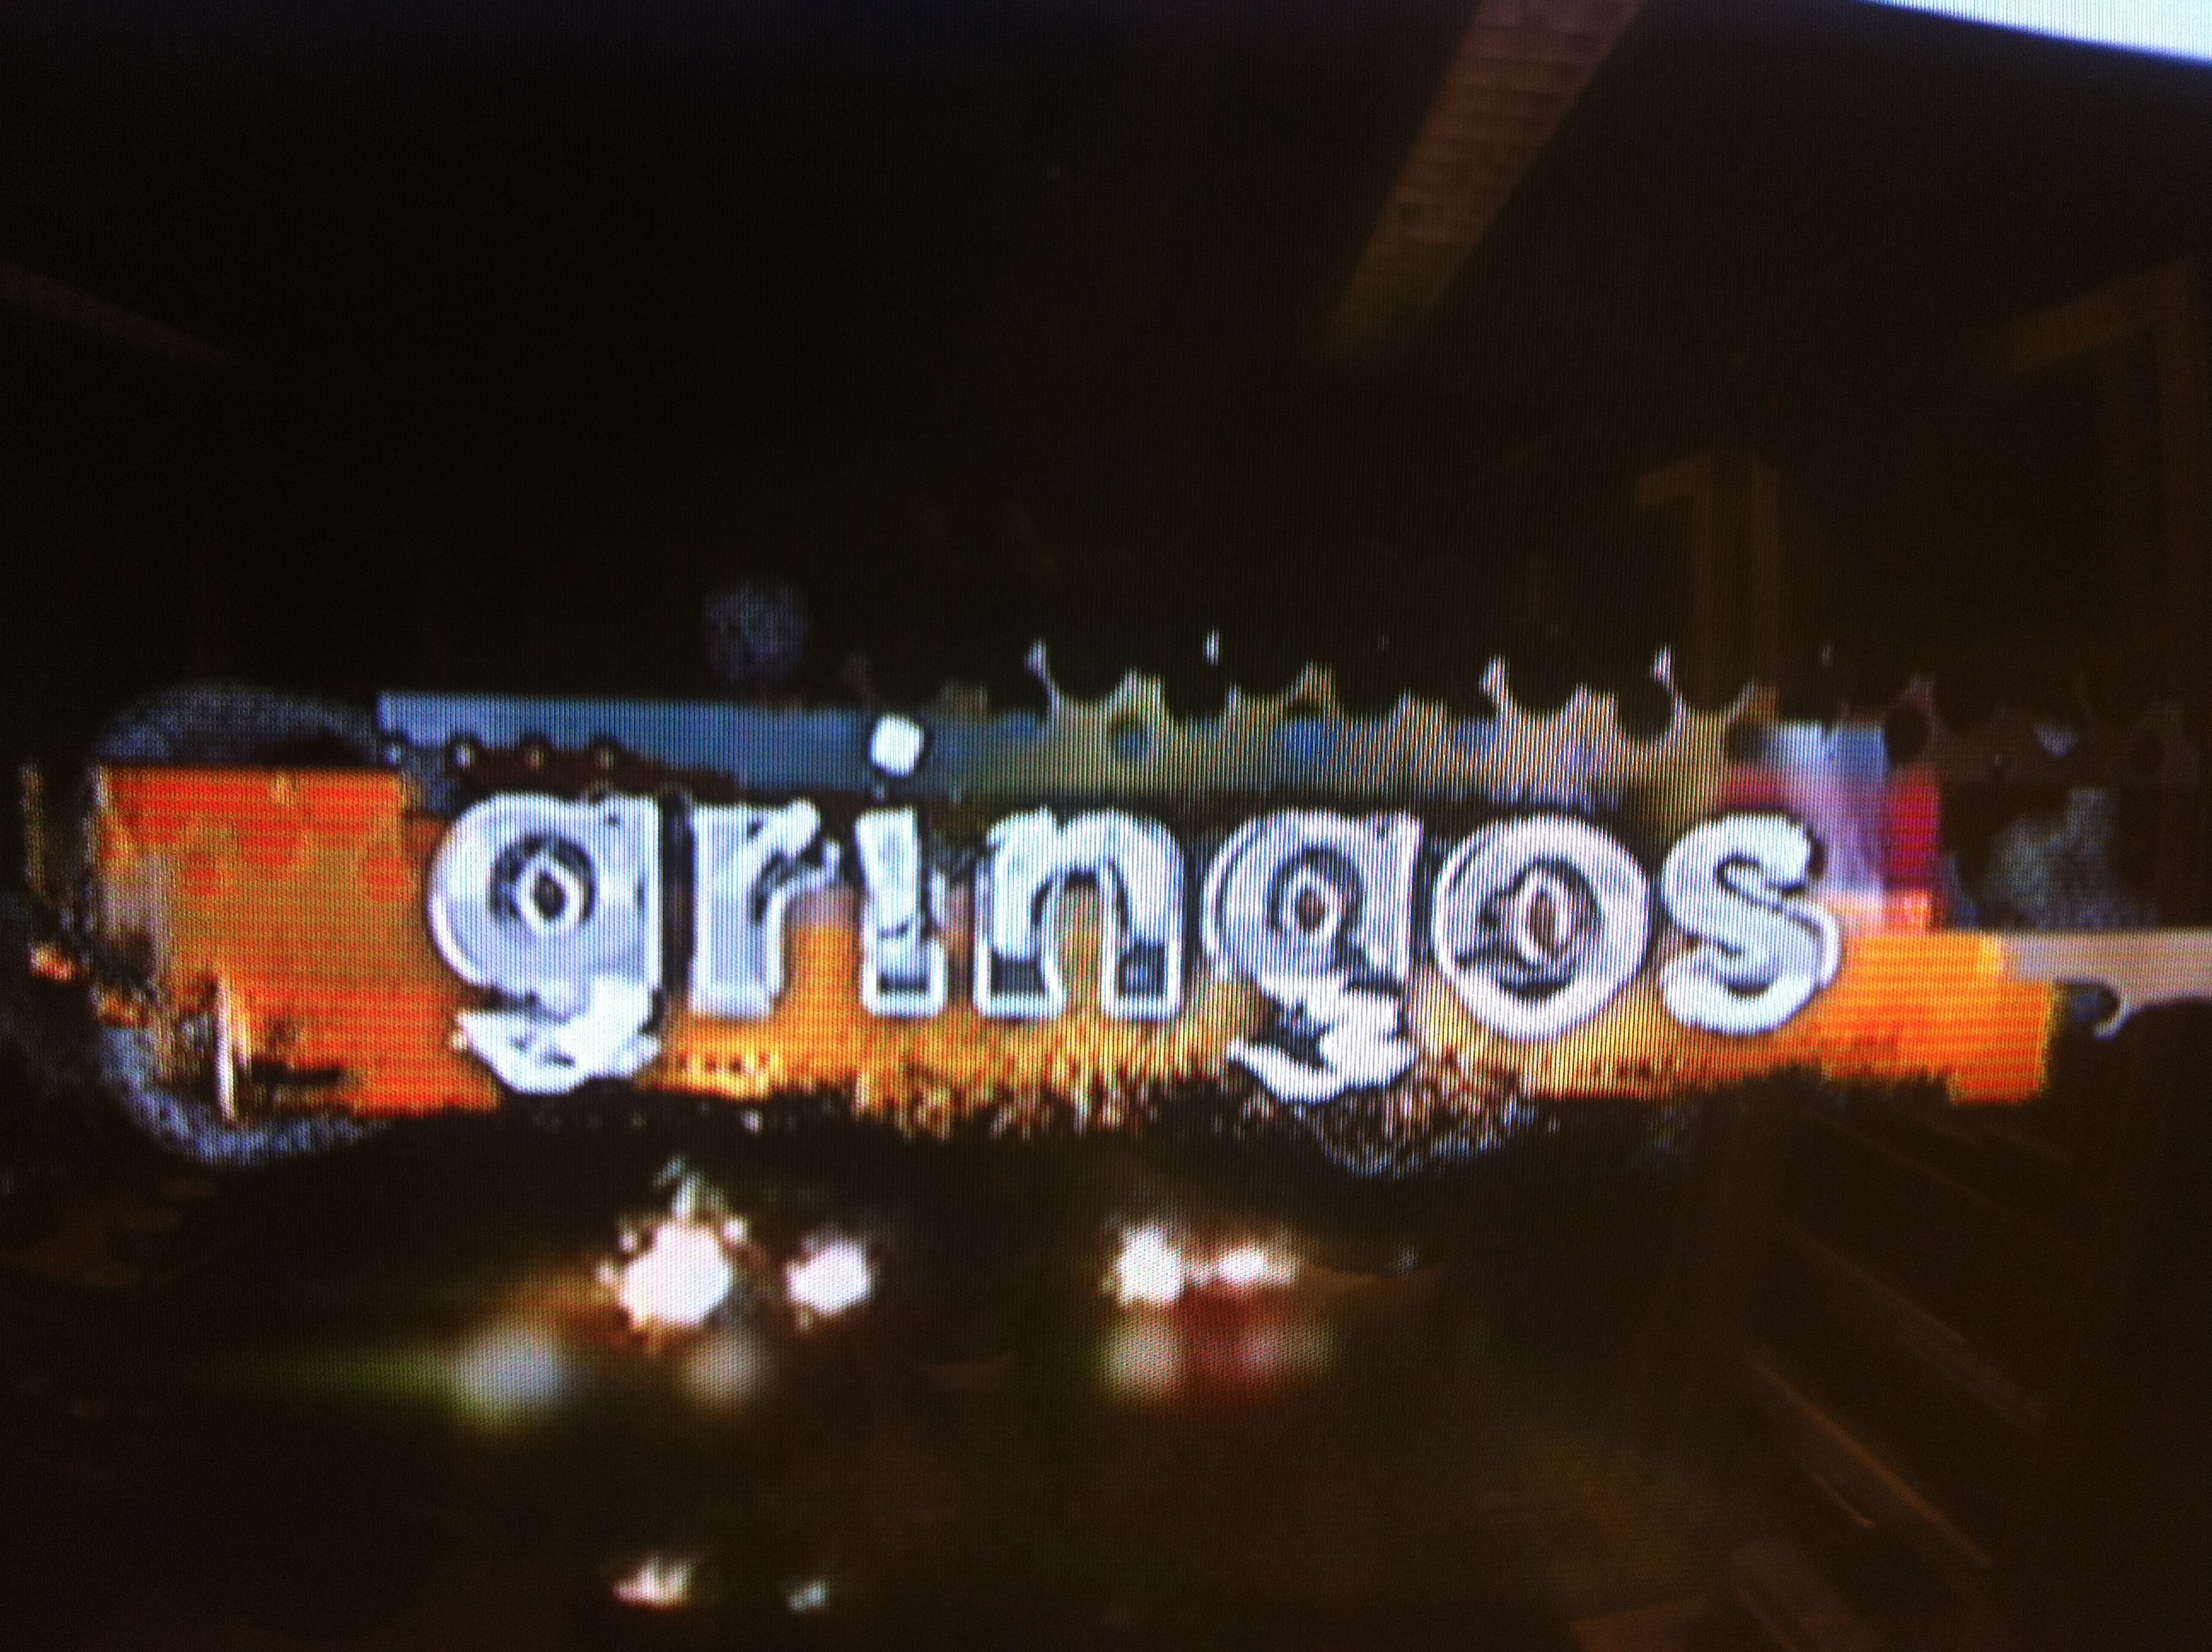 gringos trademark 1998